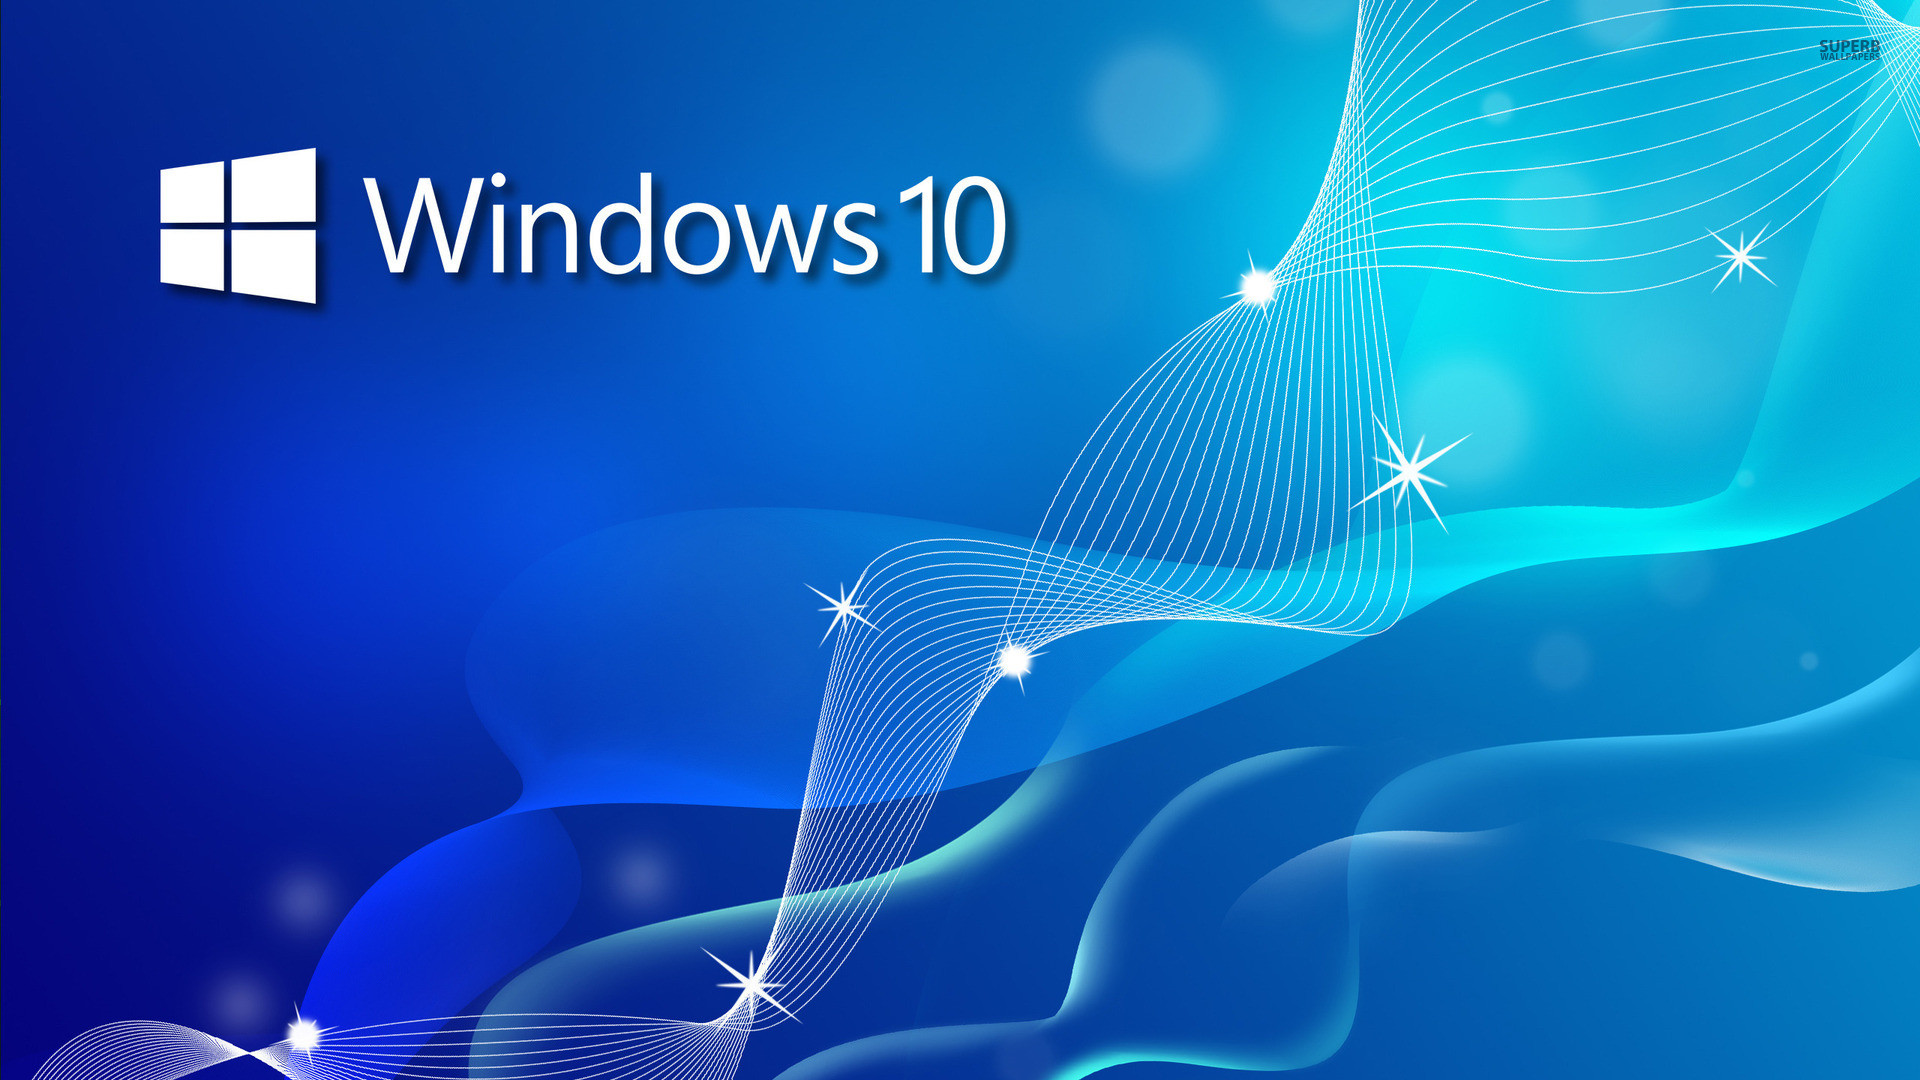 1920x1080 Windows 10 Wallpaper Free Download